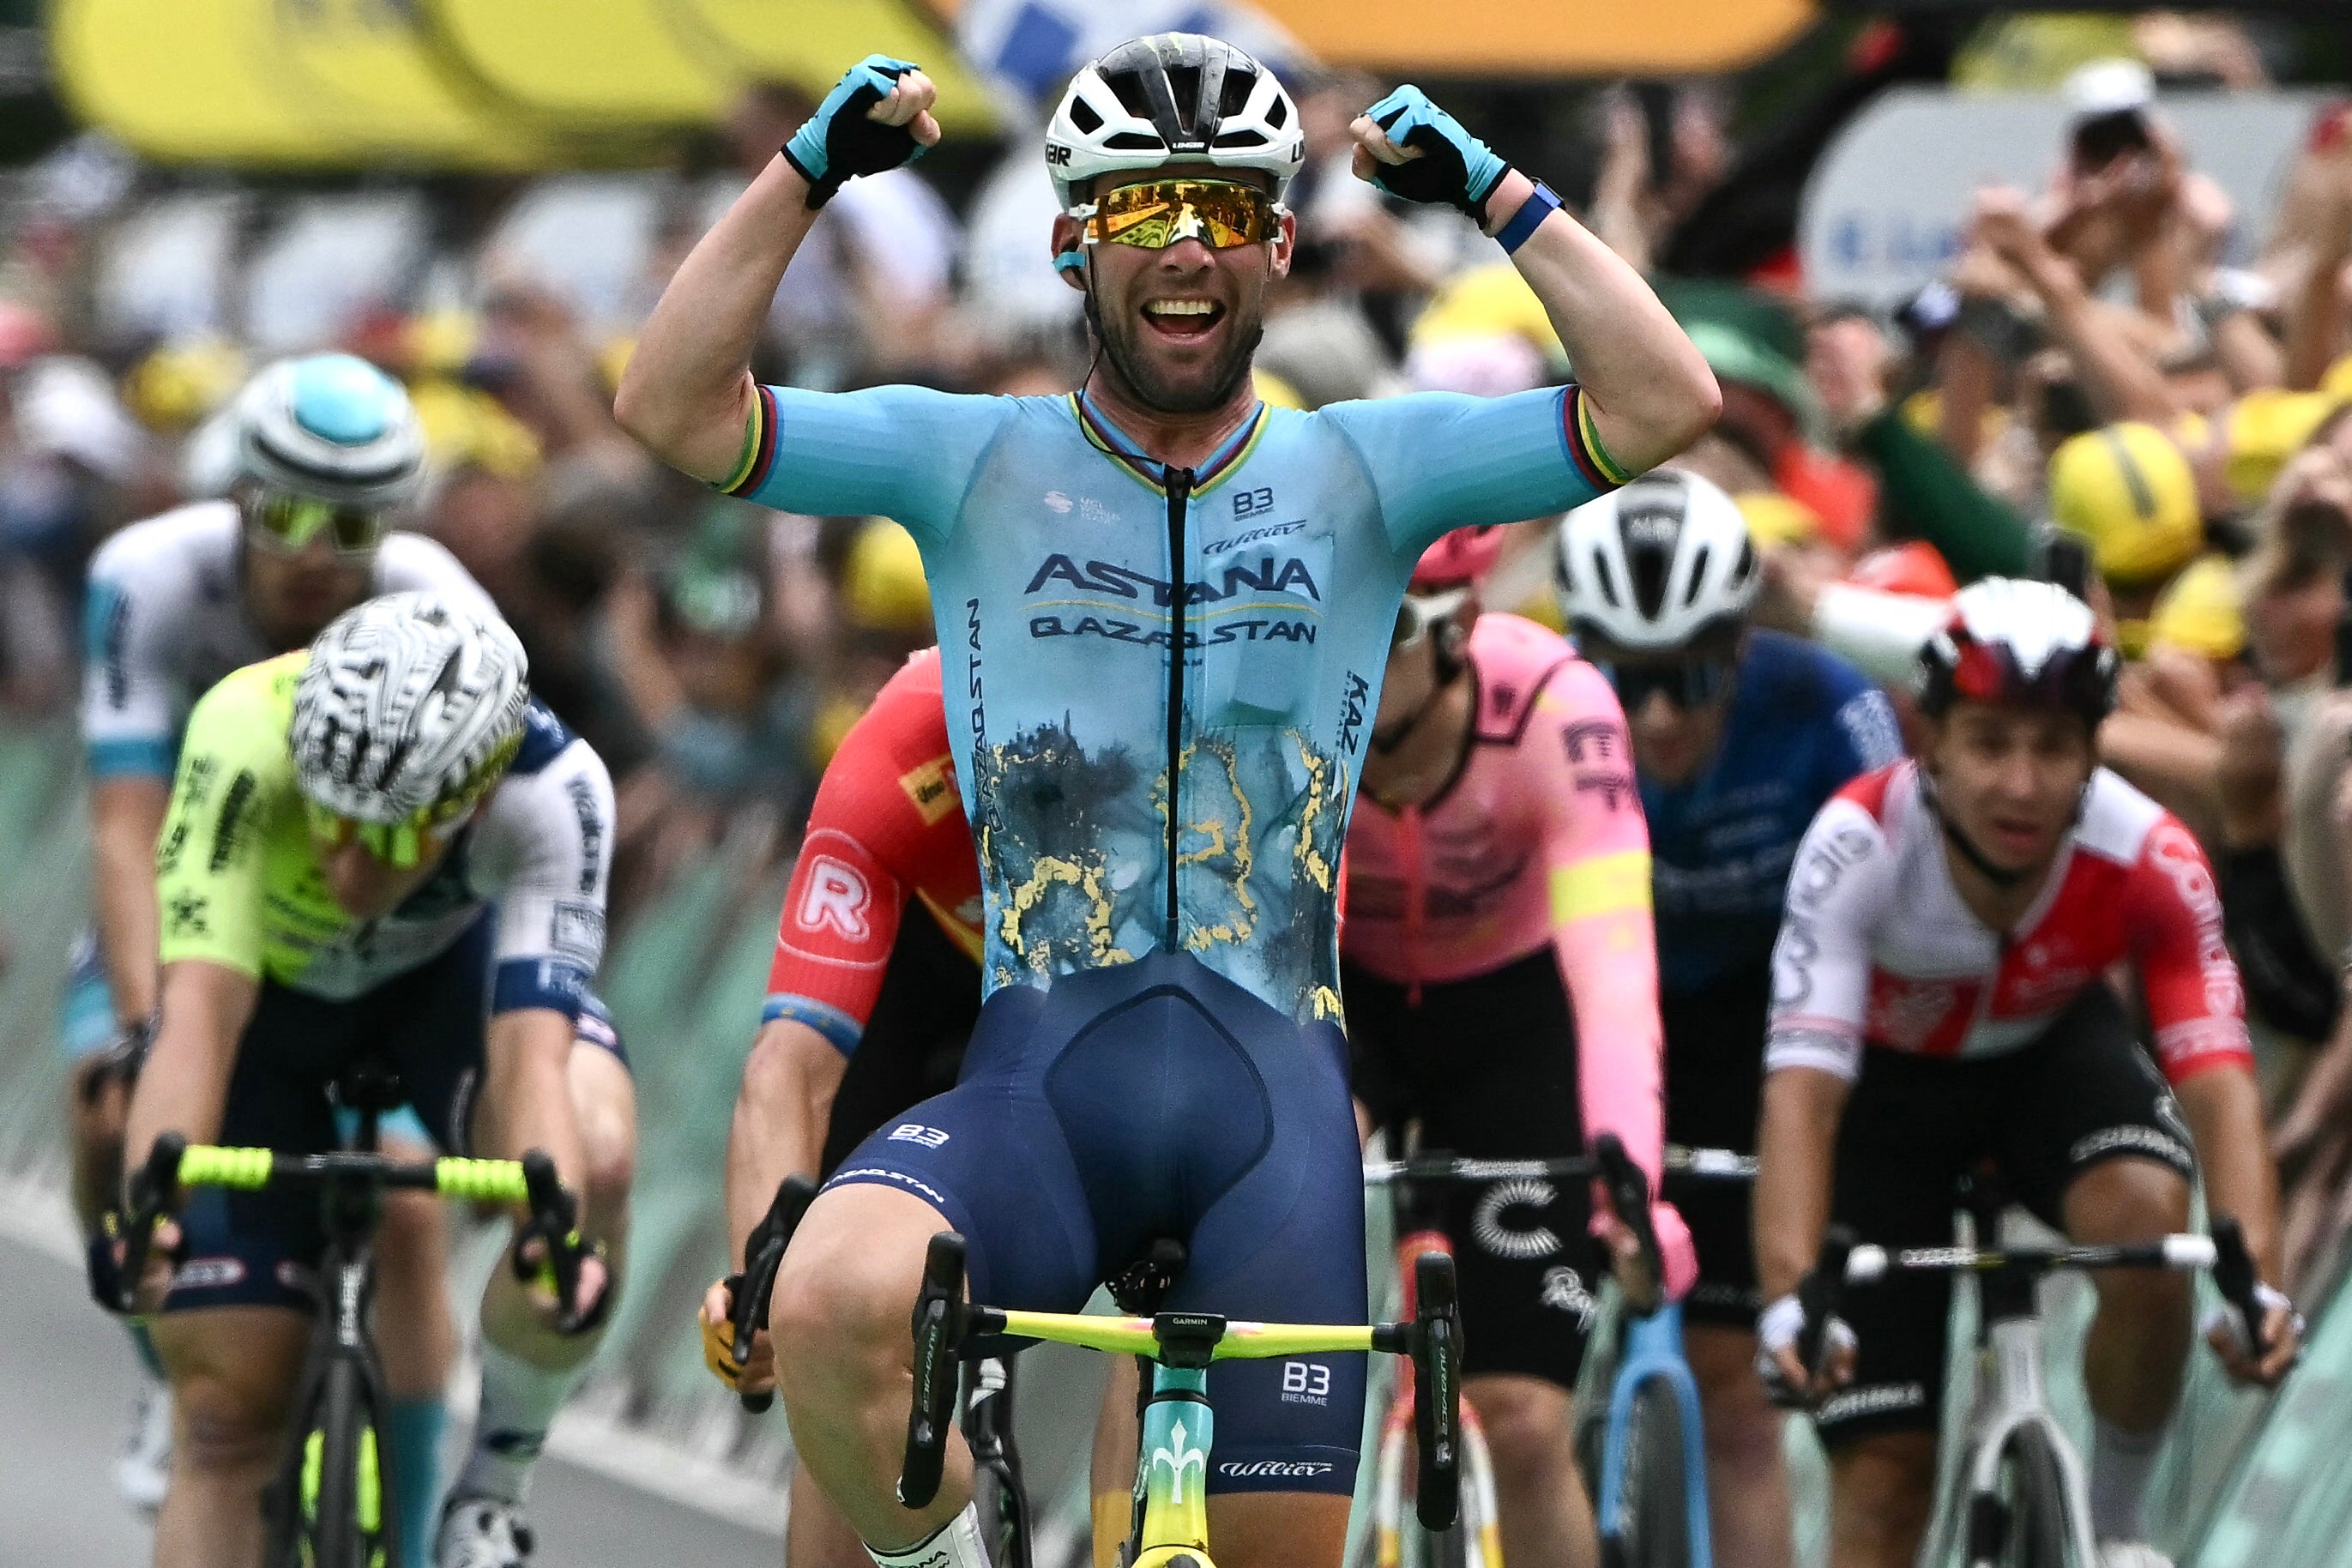 Mark Cavendish celebrated his historic win